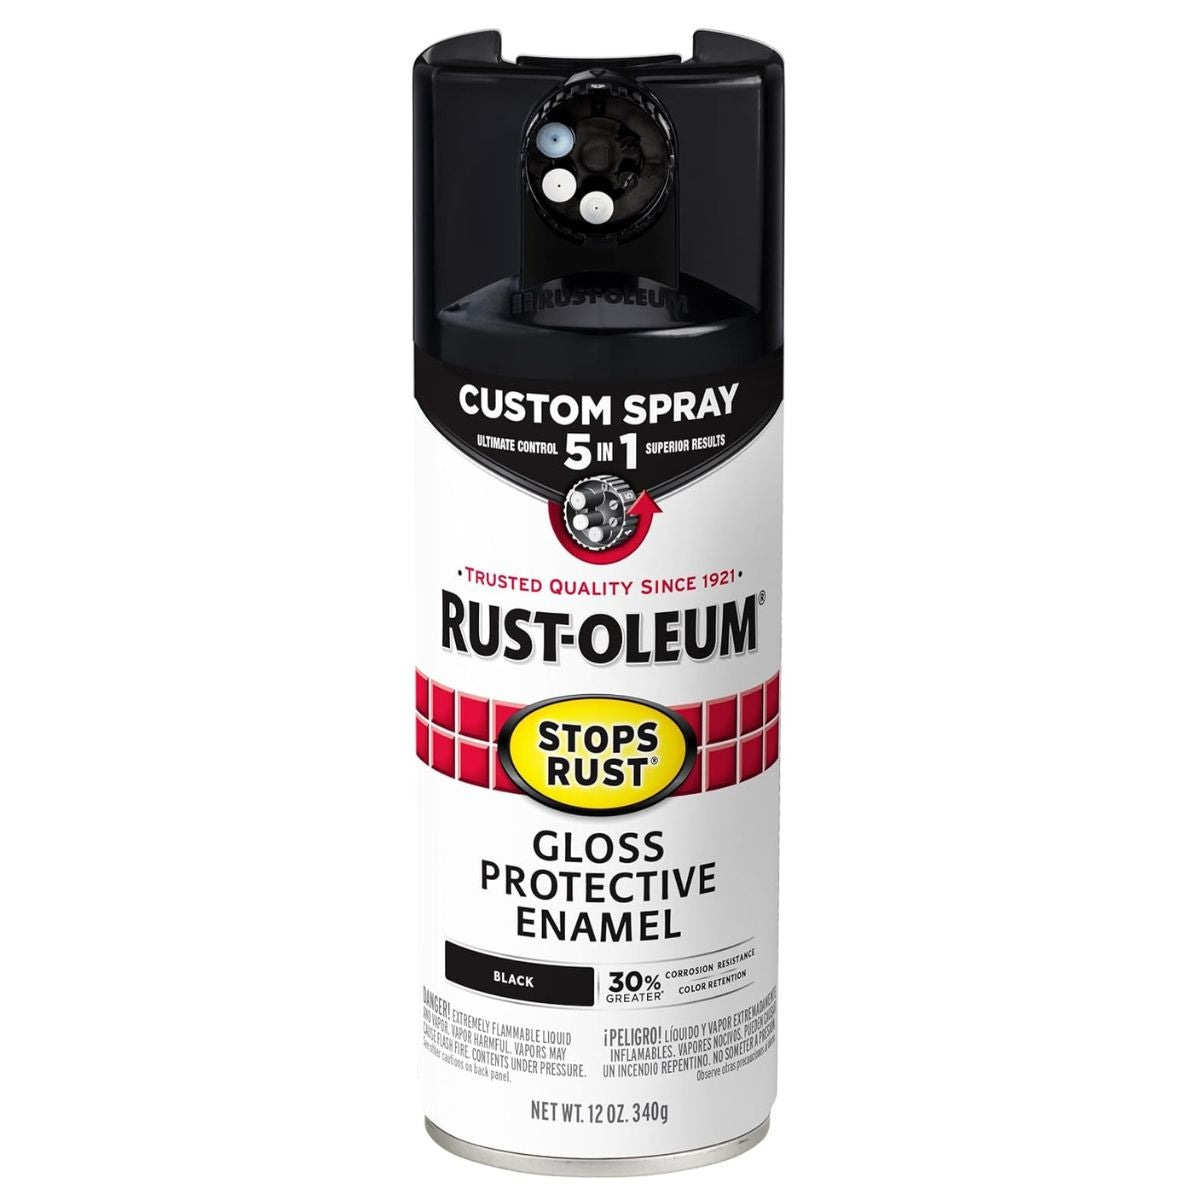 Rust-Oleum 340g Black Stops Rust Custom Spray 5 In 1 Spray Paint - South East Clearance Centre